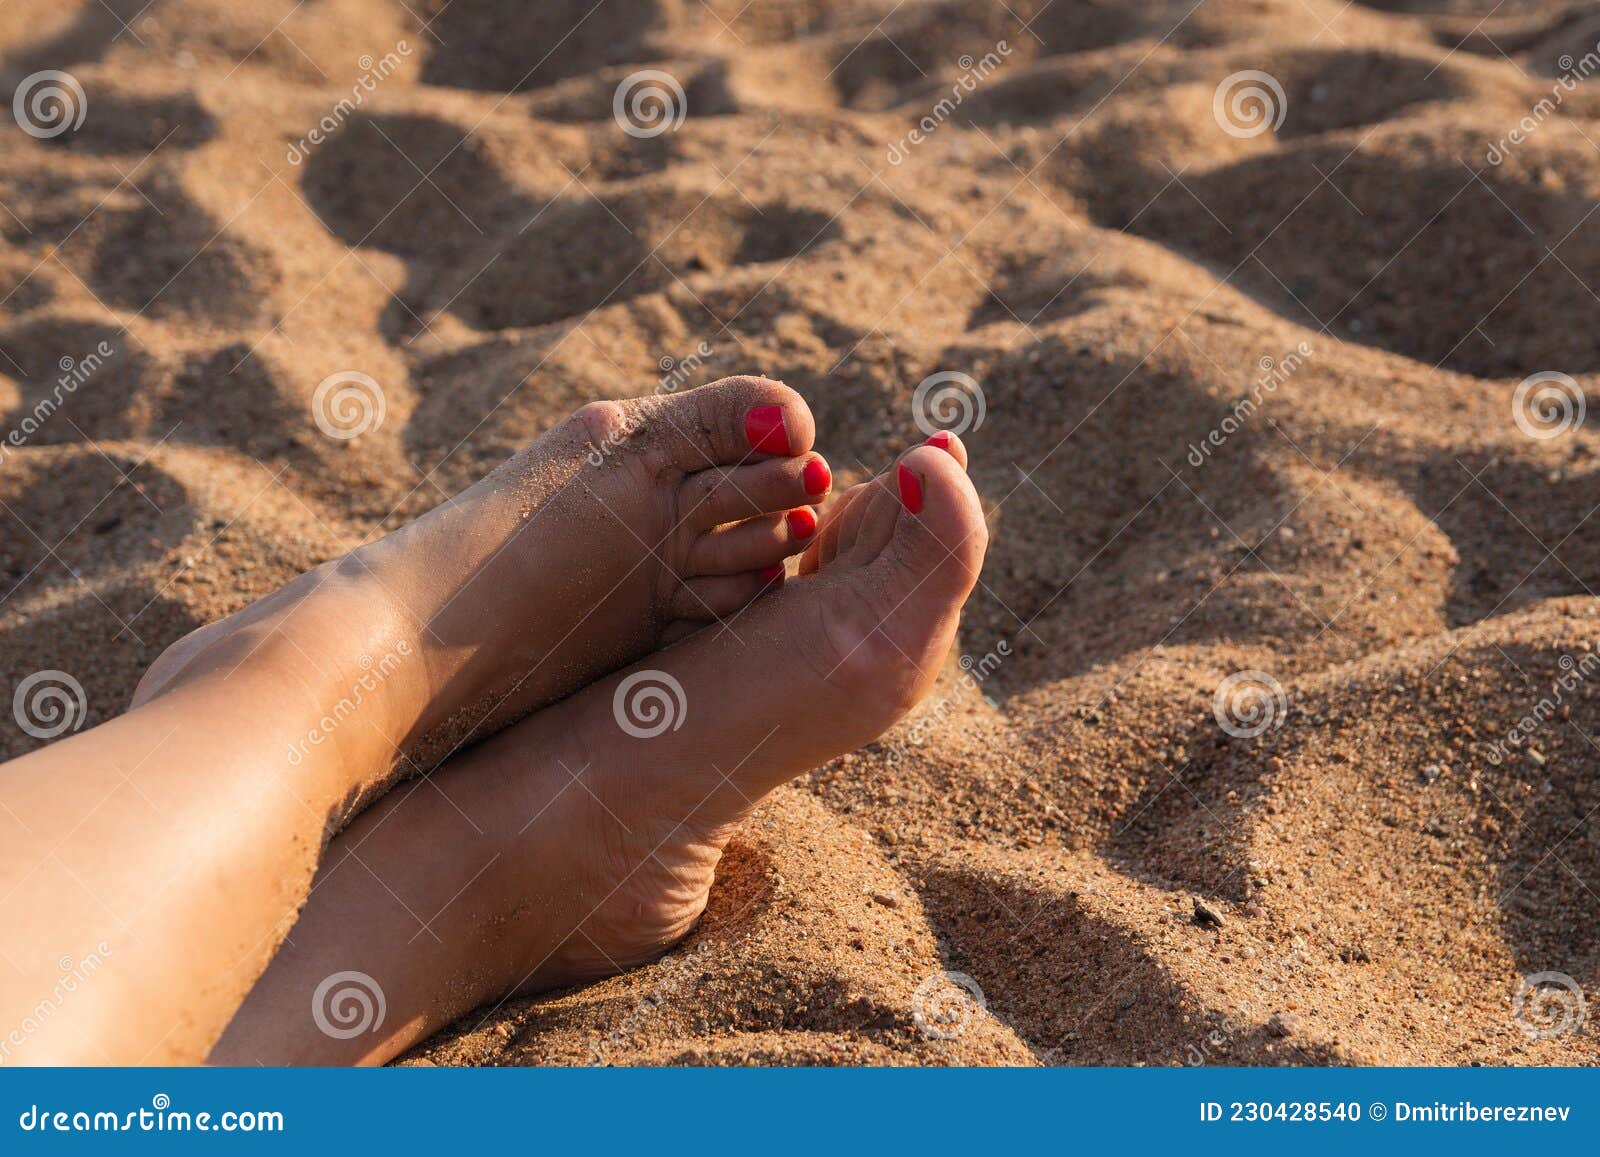 Голая жена с друзьями мужа на пляже (64 фото)